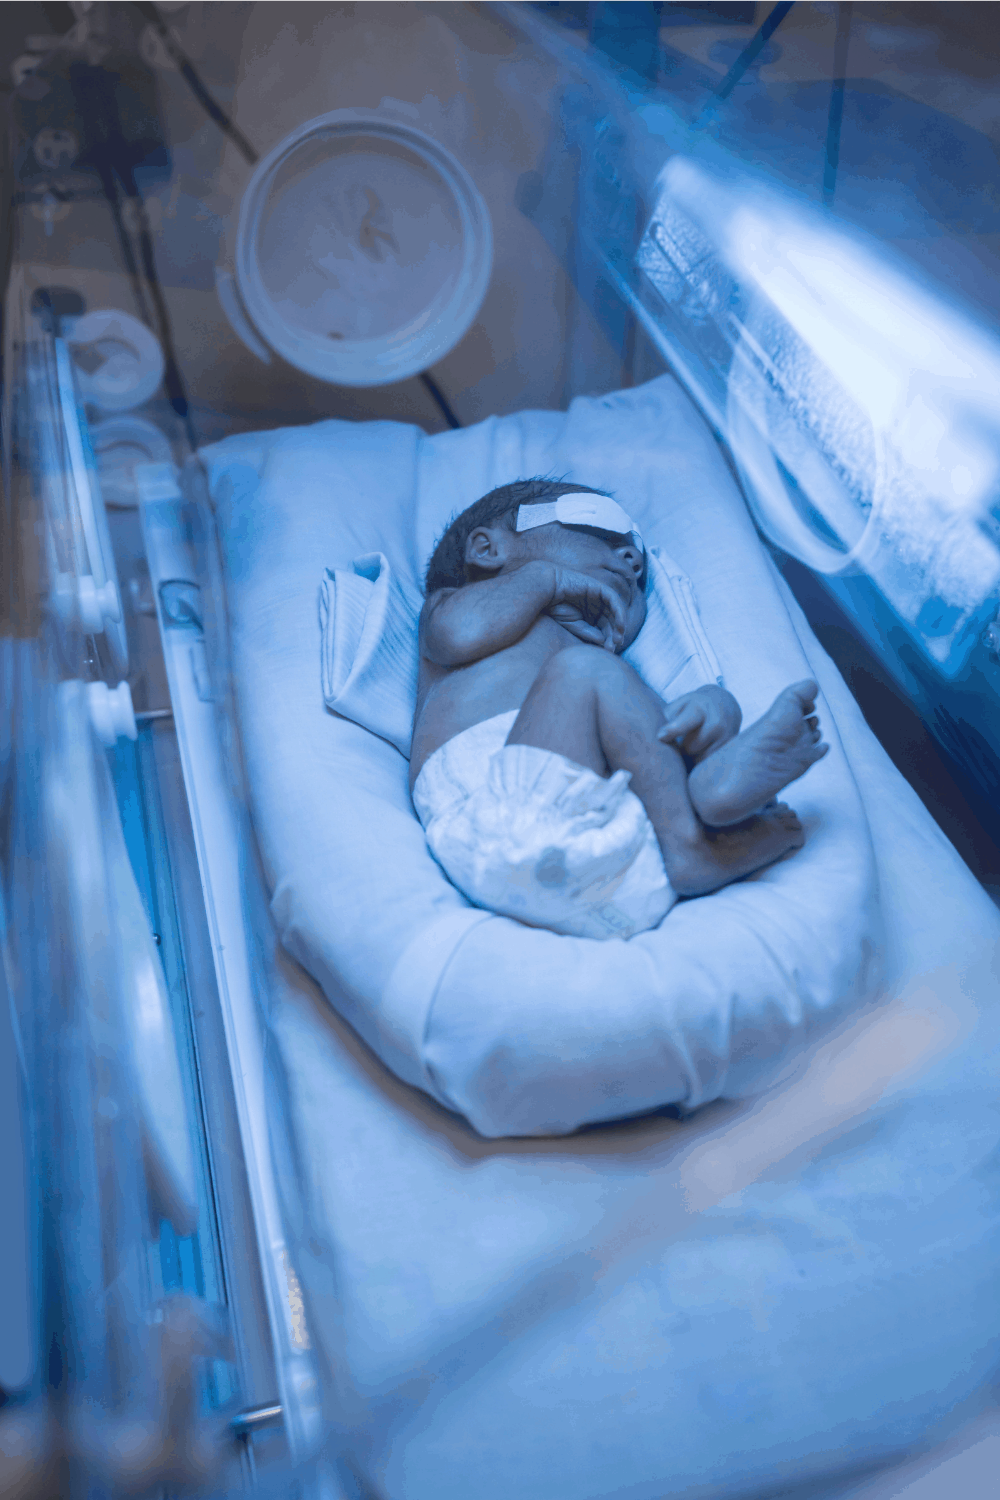 Newborn Baby Jaundice In Newborns: Why It Happens And How It Is Treated ...